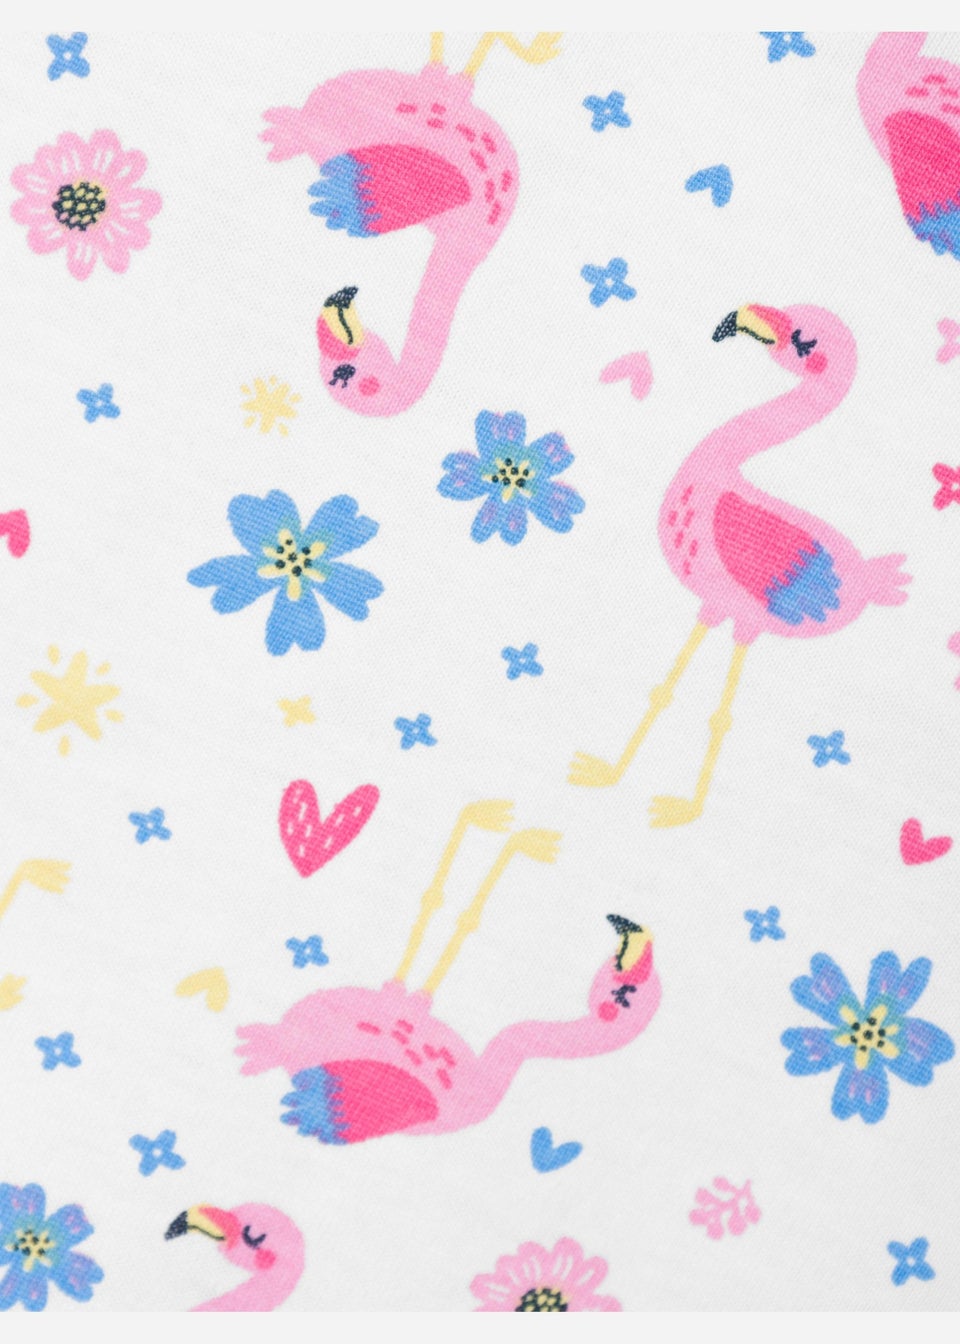 Girls White Flamingo Print Dress (9mths-5yrs)